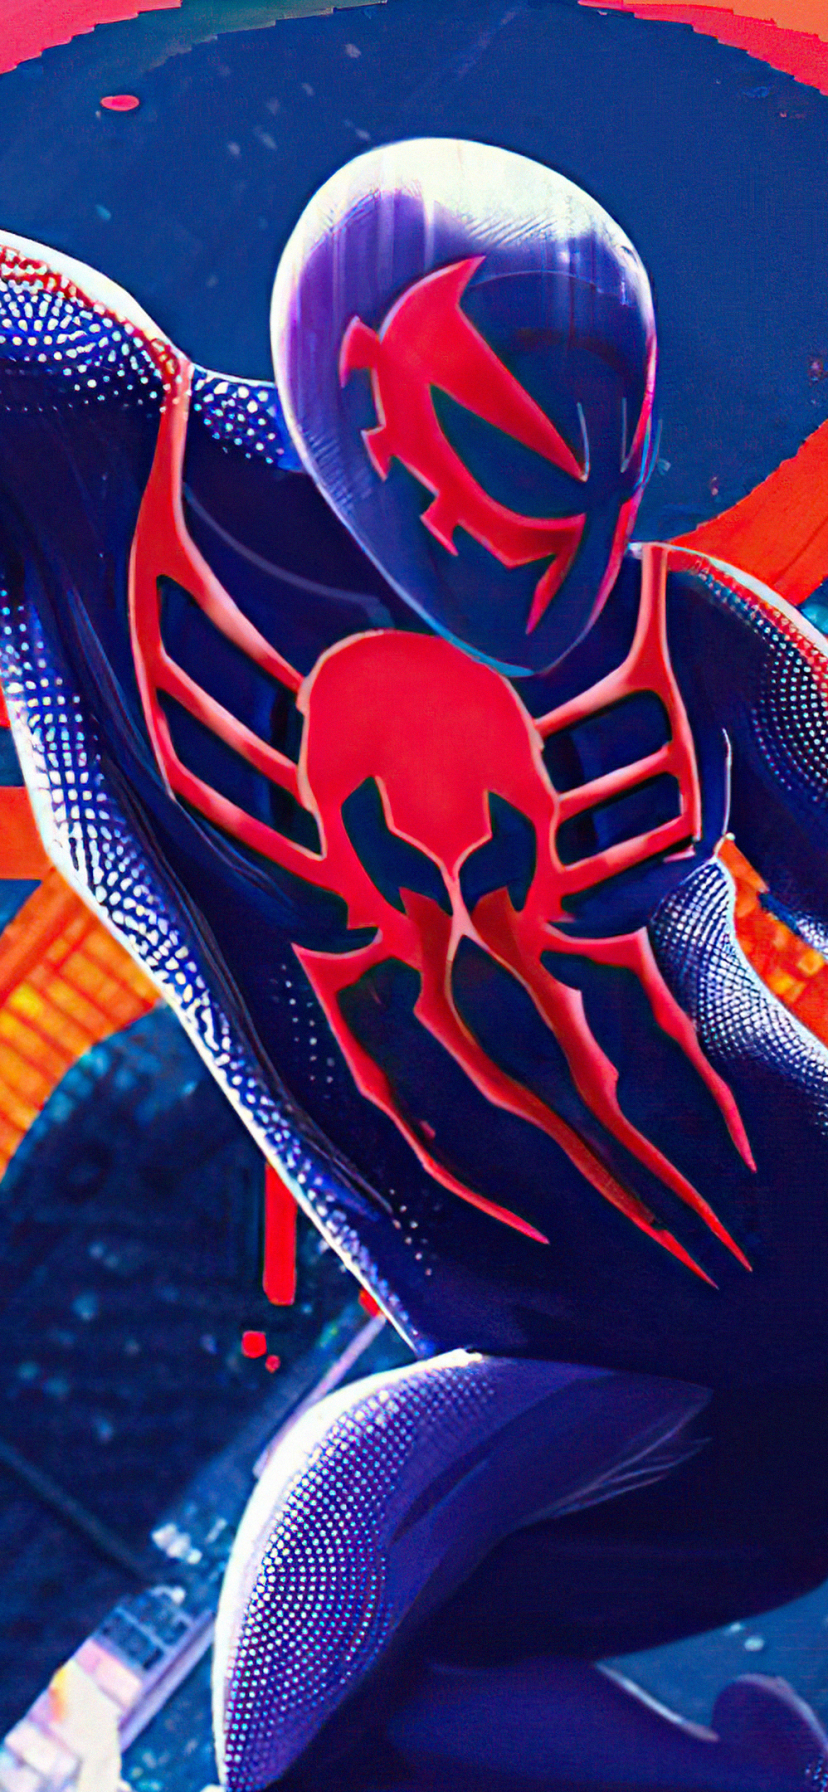 Spider-Man 2099 Phone Wallpaper by V2V Designs